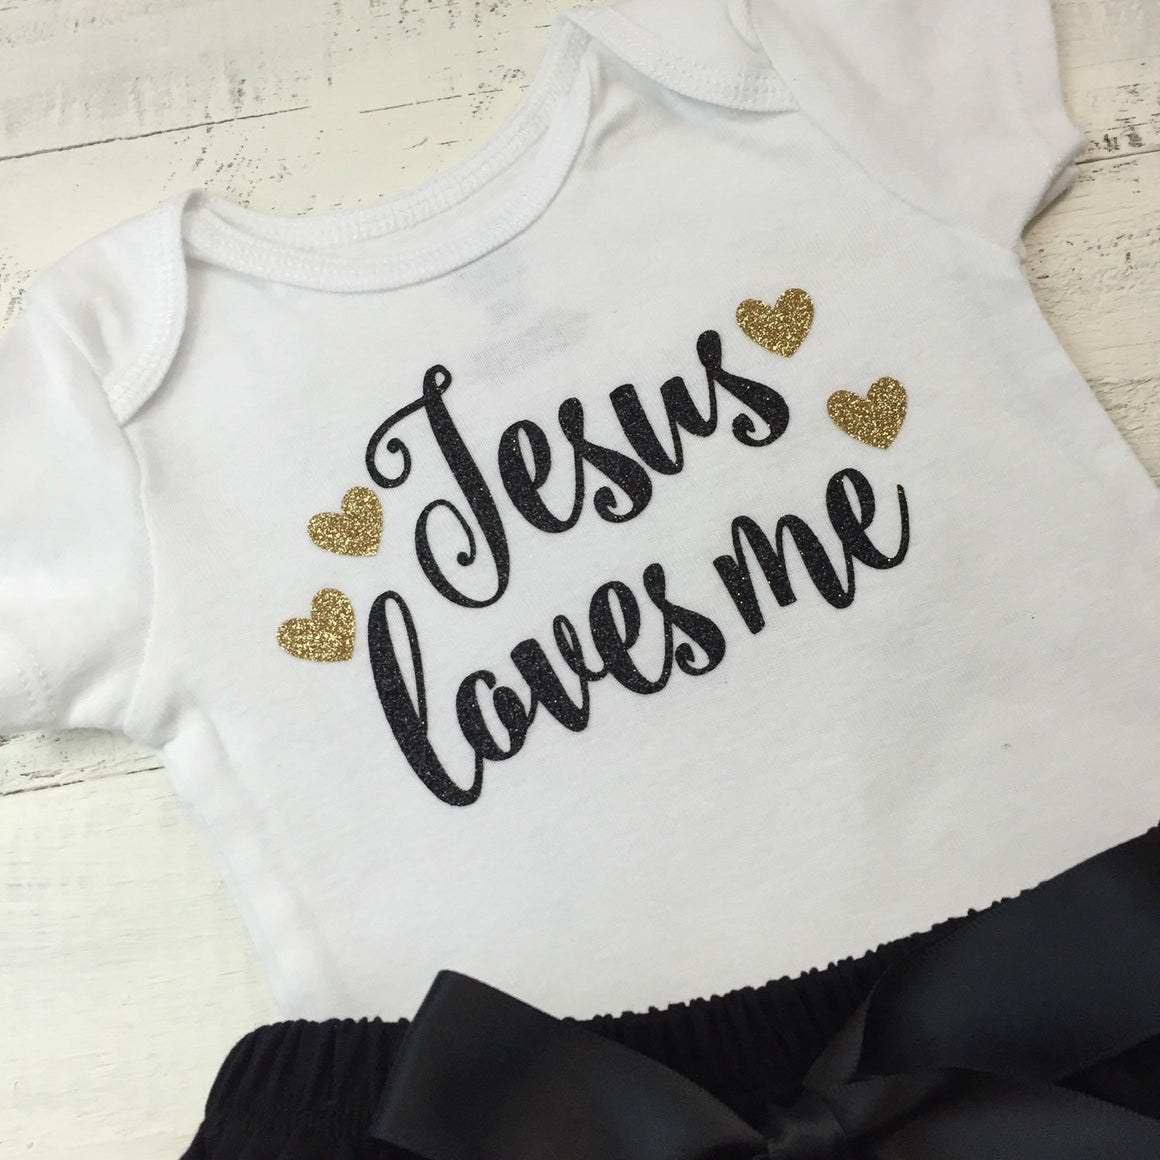 Jesus loves me - Black and Gold Glitter bodysuit - HoneyLoveBoutique